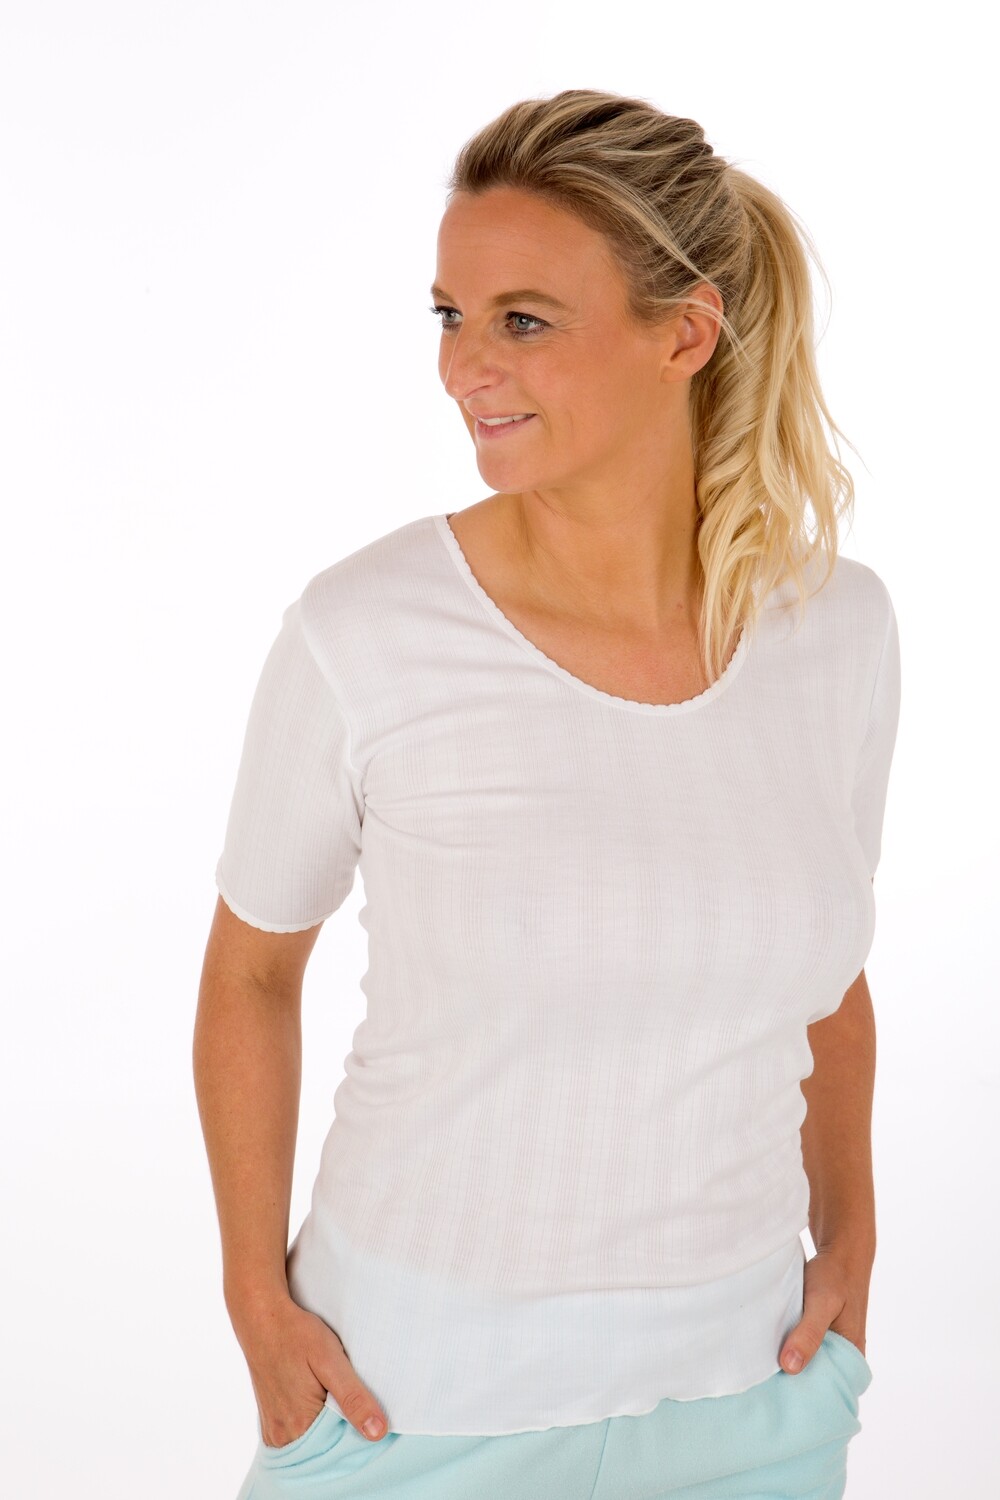 Perlina Dames onderhemd: Thermisch, ZWART of wit